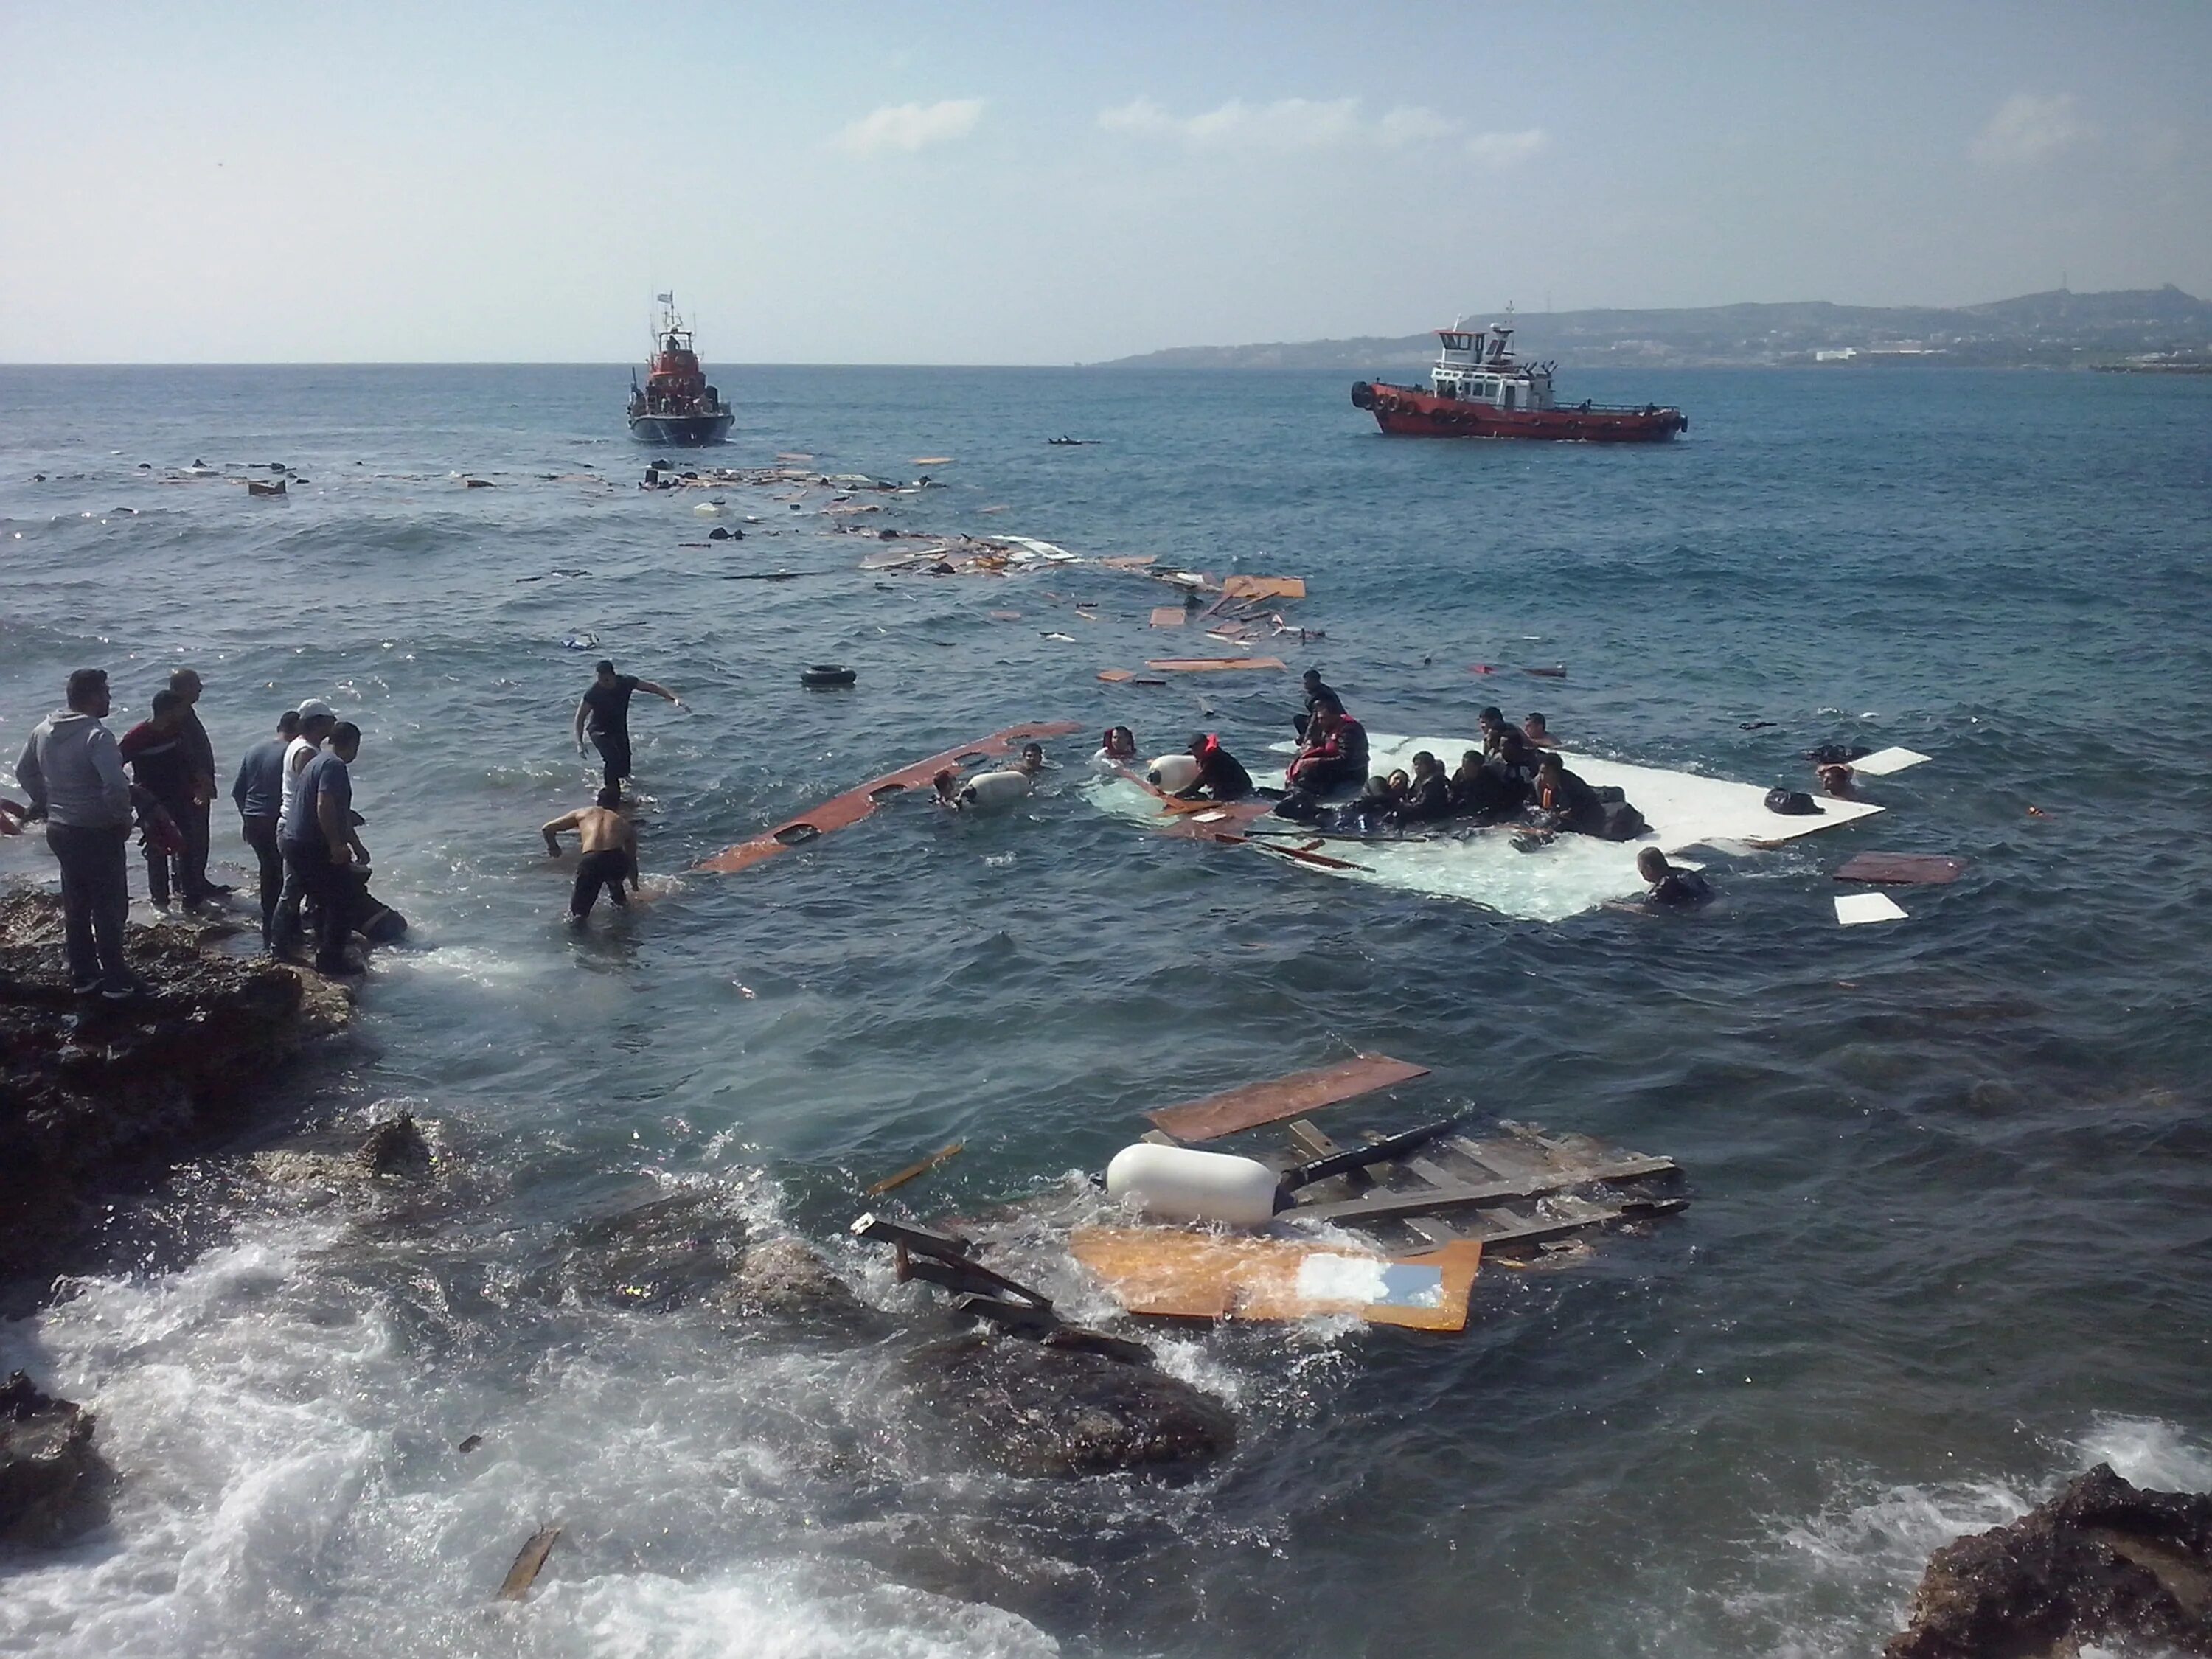 Судно с беженцами затонуло Средиземное море. Мигранты утонули в Средиземном море. Средиземное море беженцы.